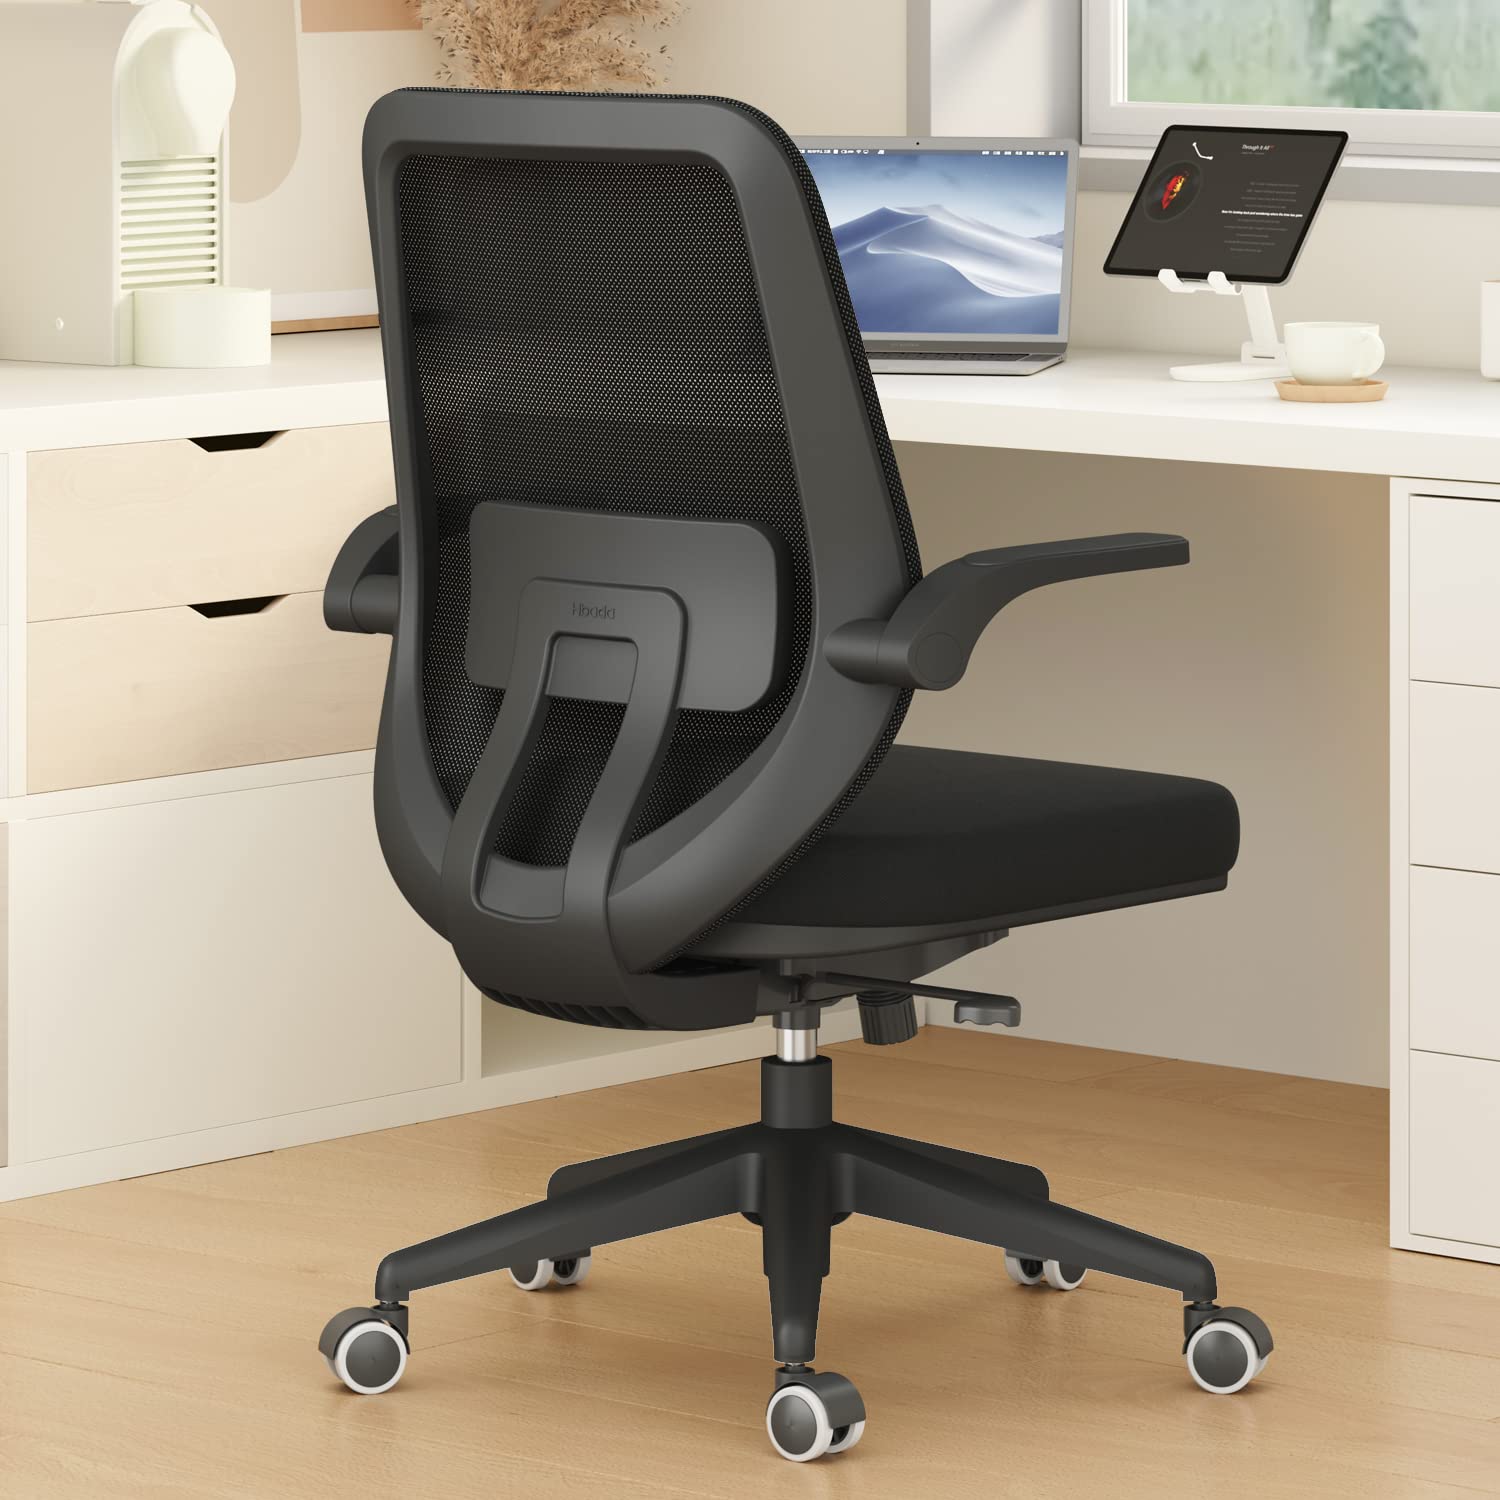 Hbada 办公椅 办公桌椅 旋转家用舒适椅子，带翻转臂和可调节高度